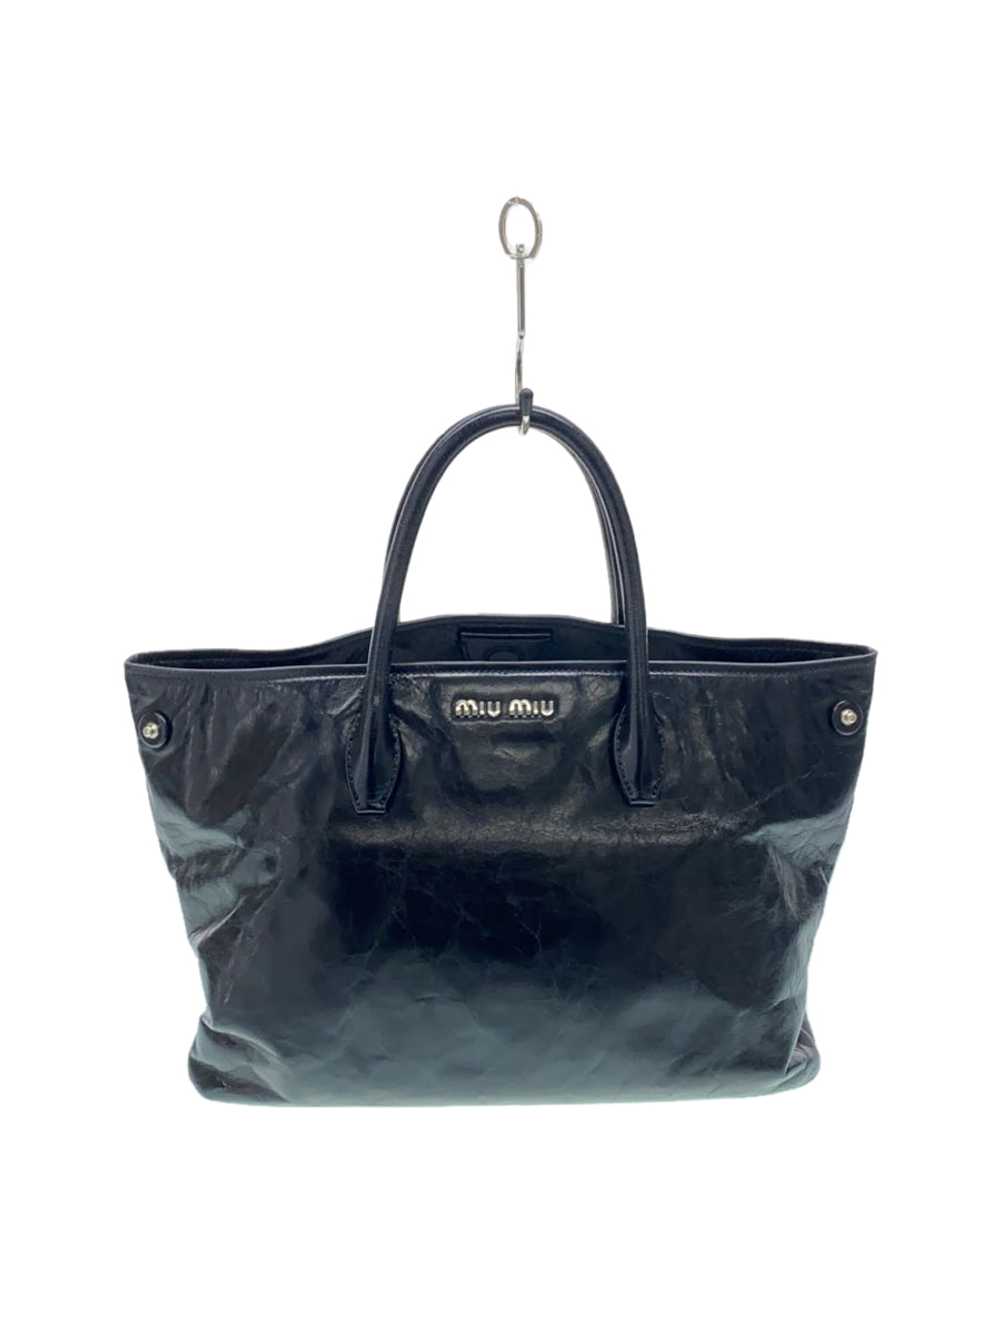 MIUMIU Tote Bag/Leather/Blk Bag - image 1